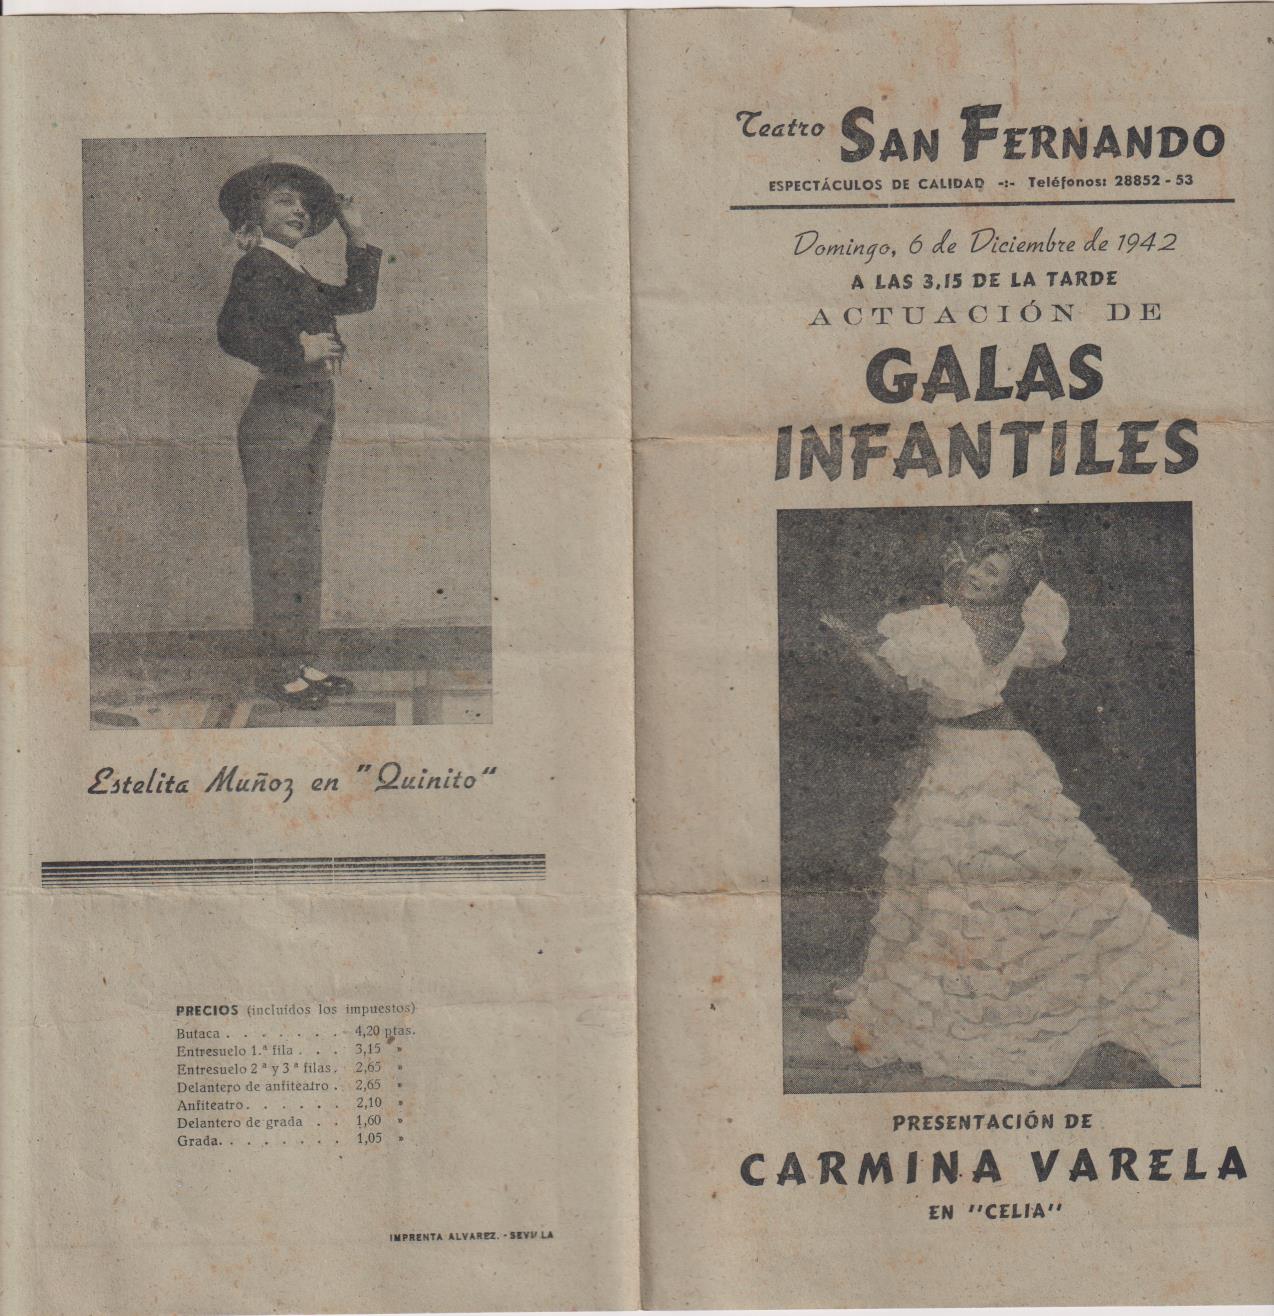 Teatro San Fernando. Galas Infantiles. 6 de Diciembre de 1942